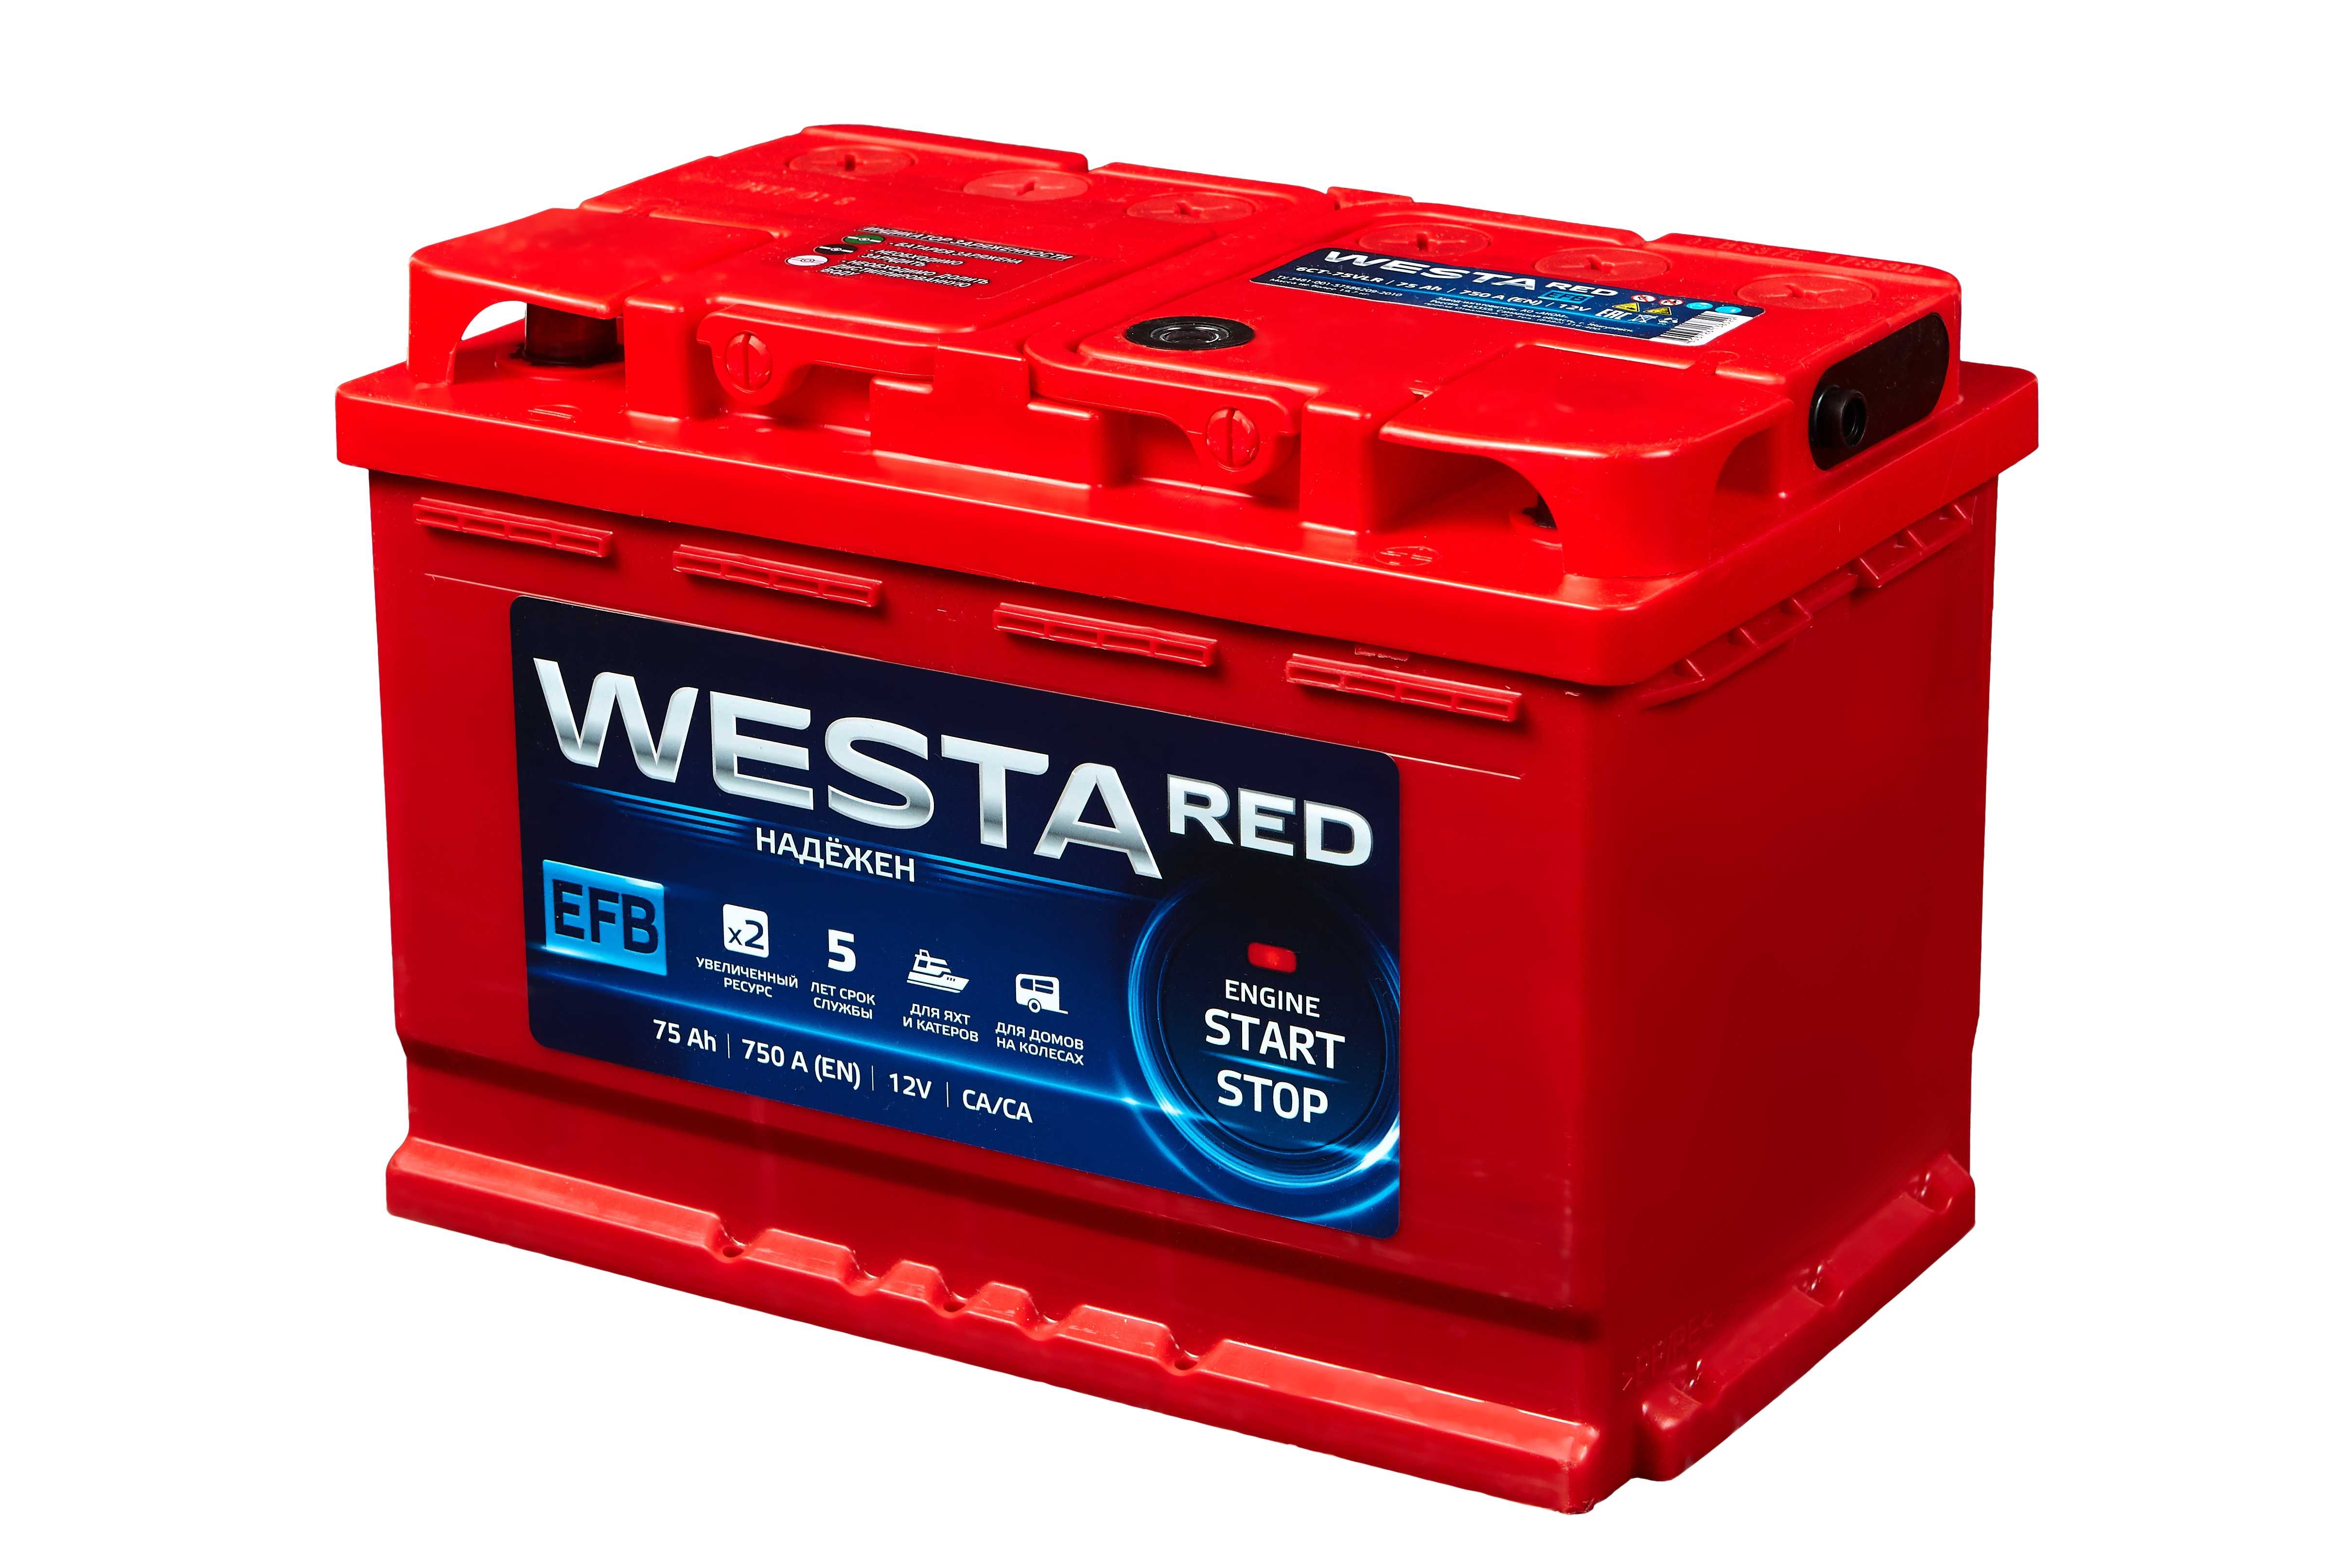 Купить российский аккумулятор. Westa Red 60 a, 640 a, 6 CT -60. Westa Red аккумулятор разбор. ТОО "Кайнар-АКБ" Vesta Red 77ah.